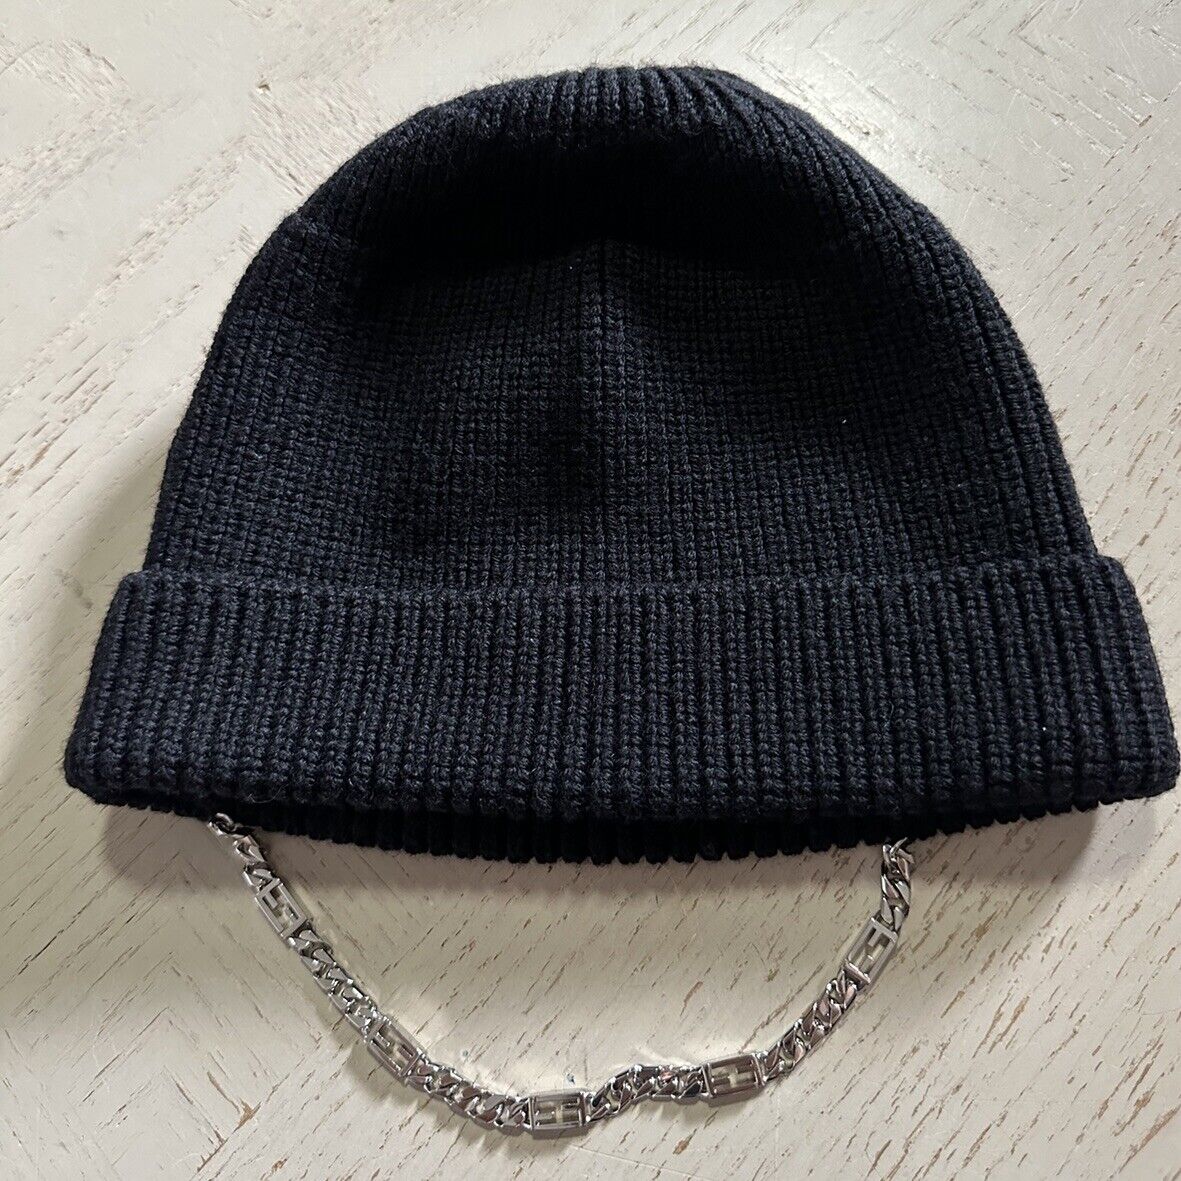 NWT $670 Fendi Beanie/Knitted Hat Black M/L FXQ907